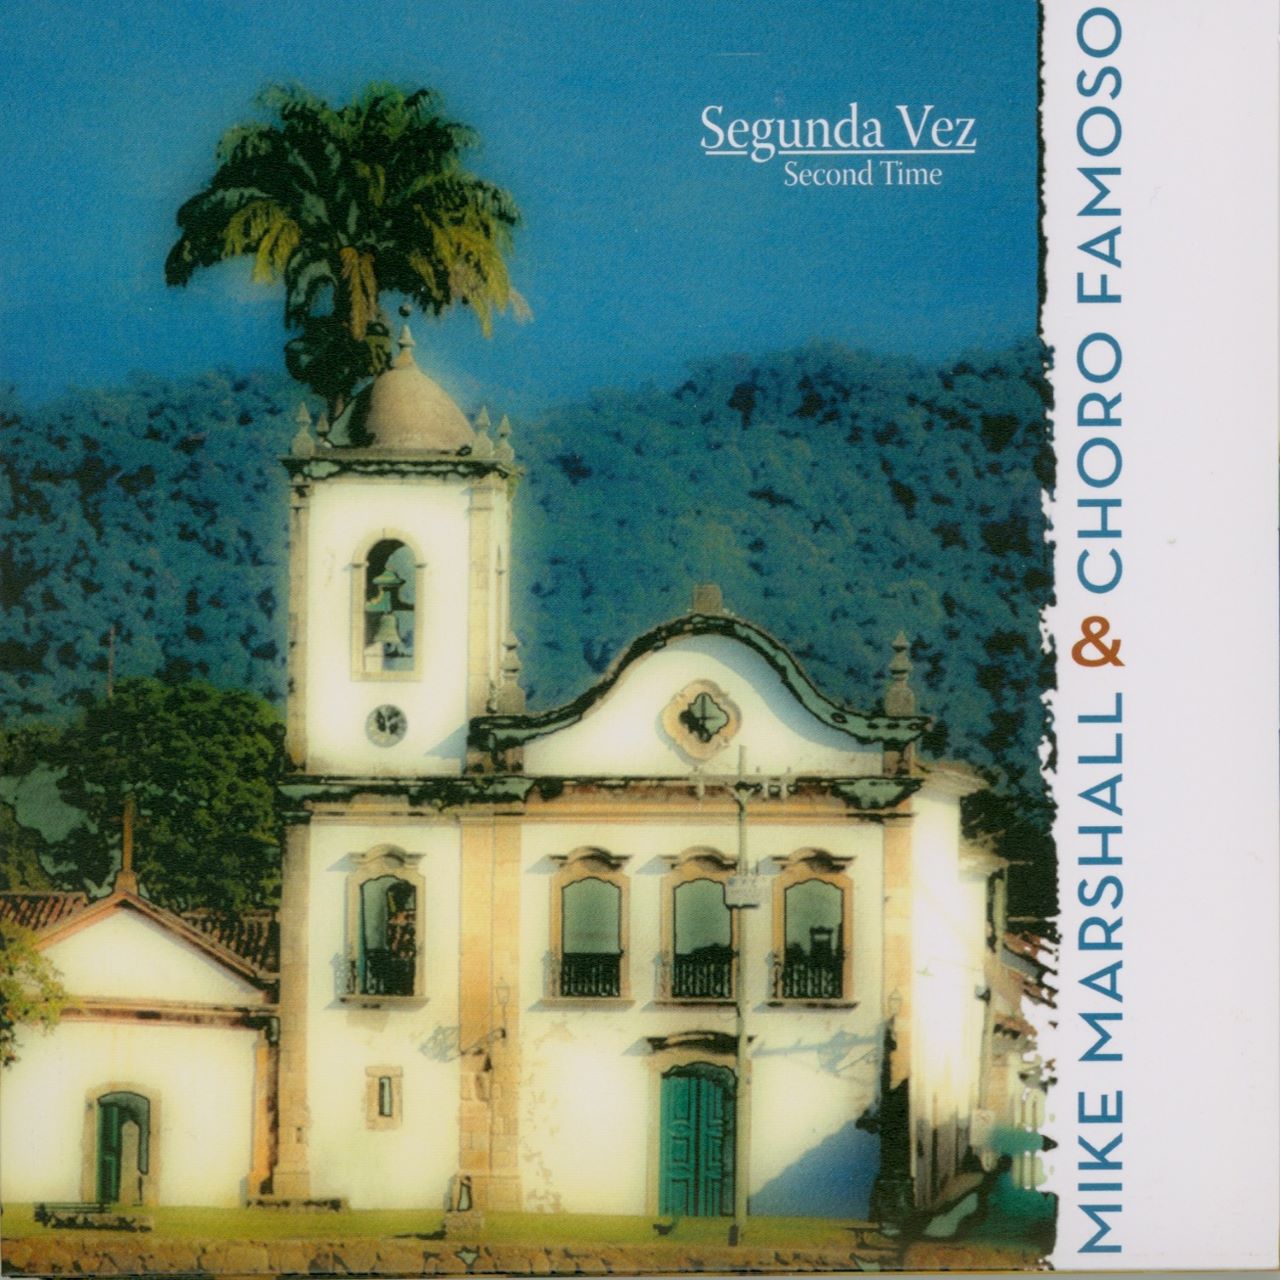 Mike Marshall & Choro Famoso - Segunda Vez - Second Time cover album